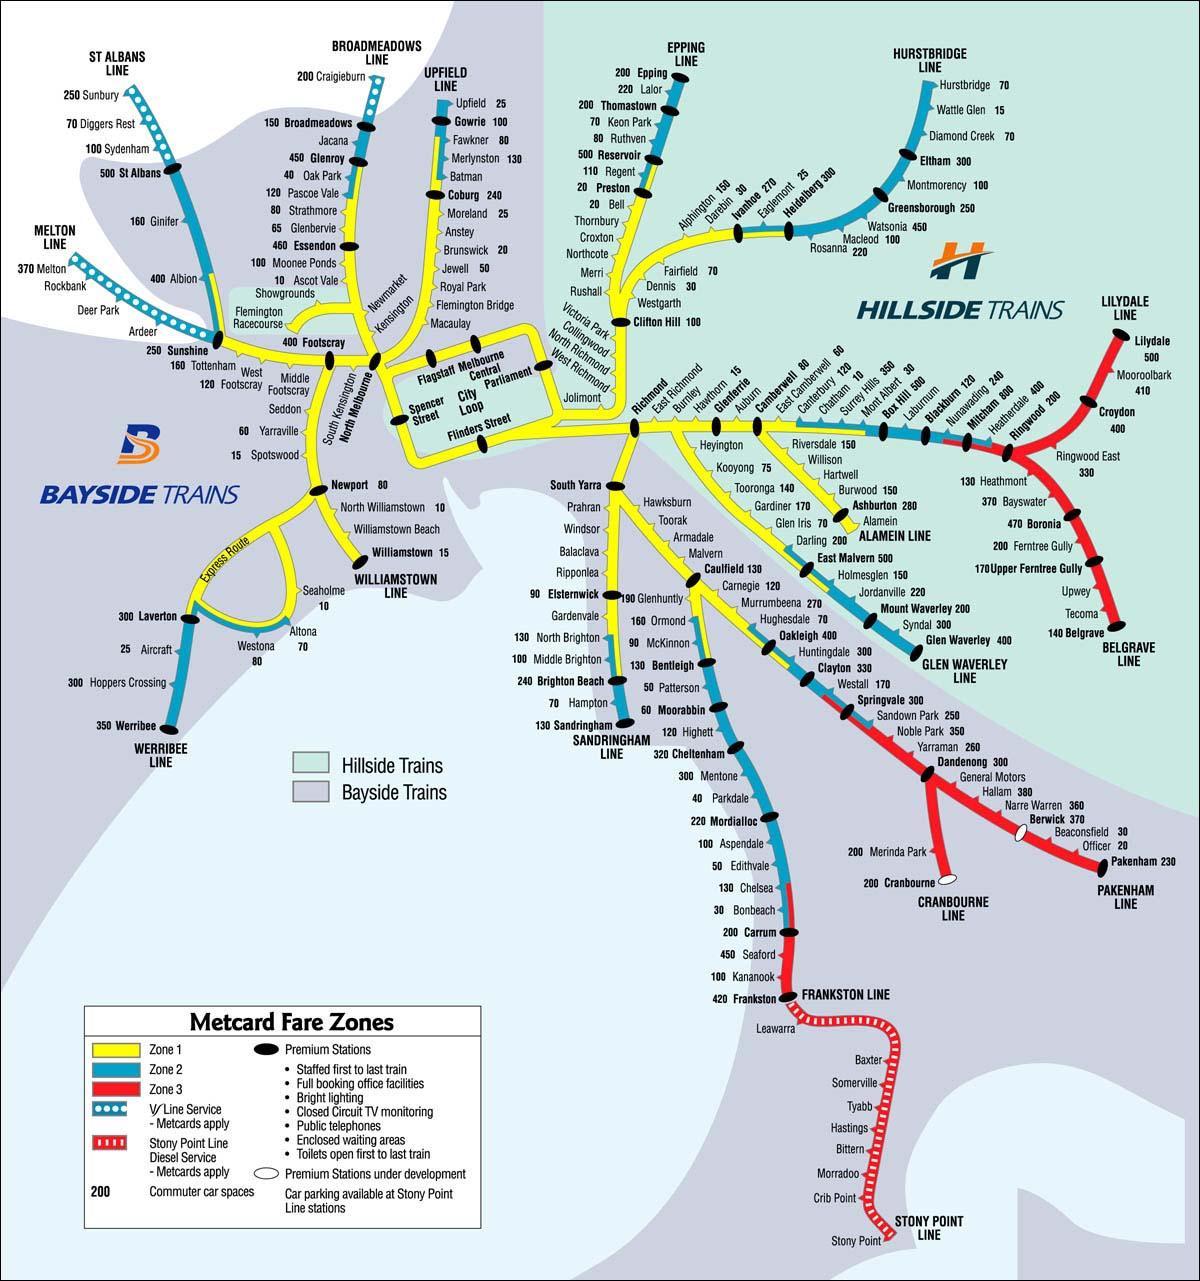 नक्शे के मेलबोर्न ट्रेन